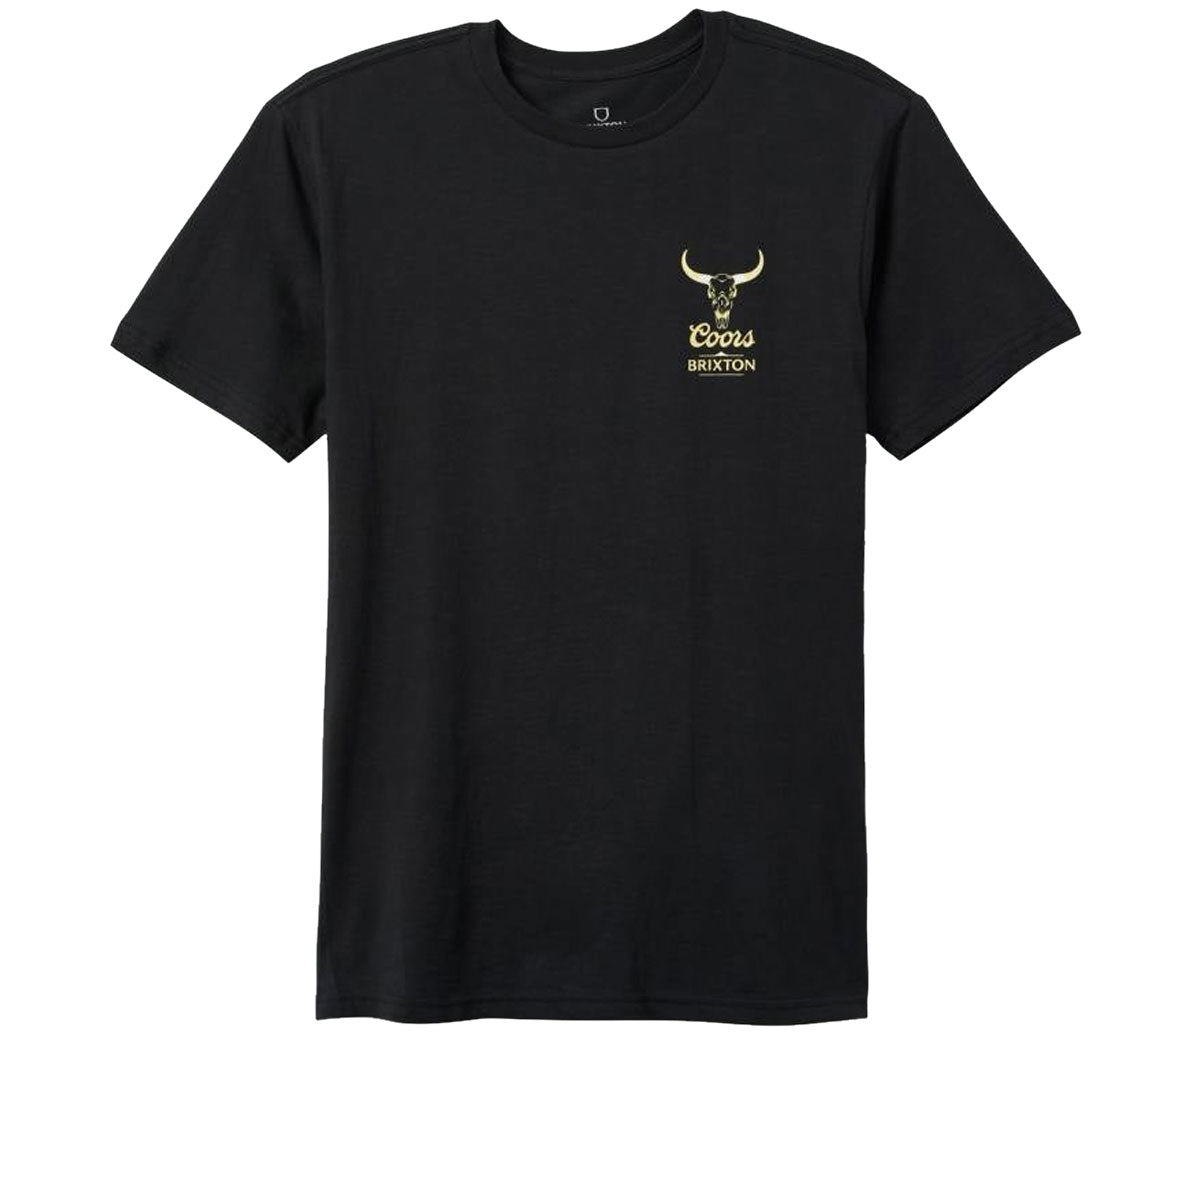 Brixton x Coors Bull T-Shirt - Black image 2